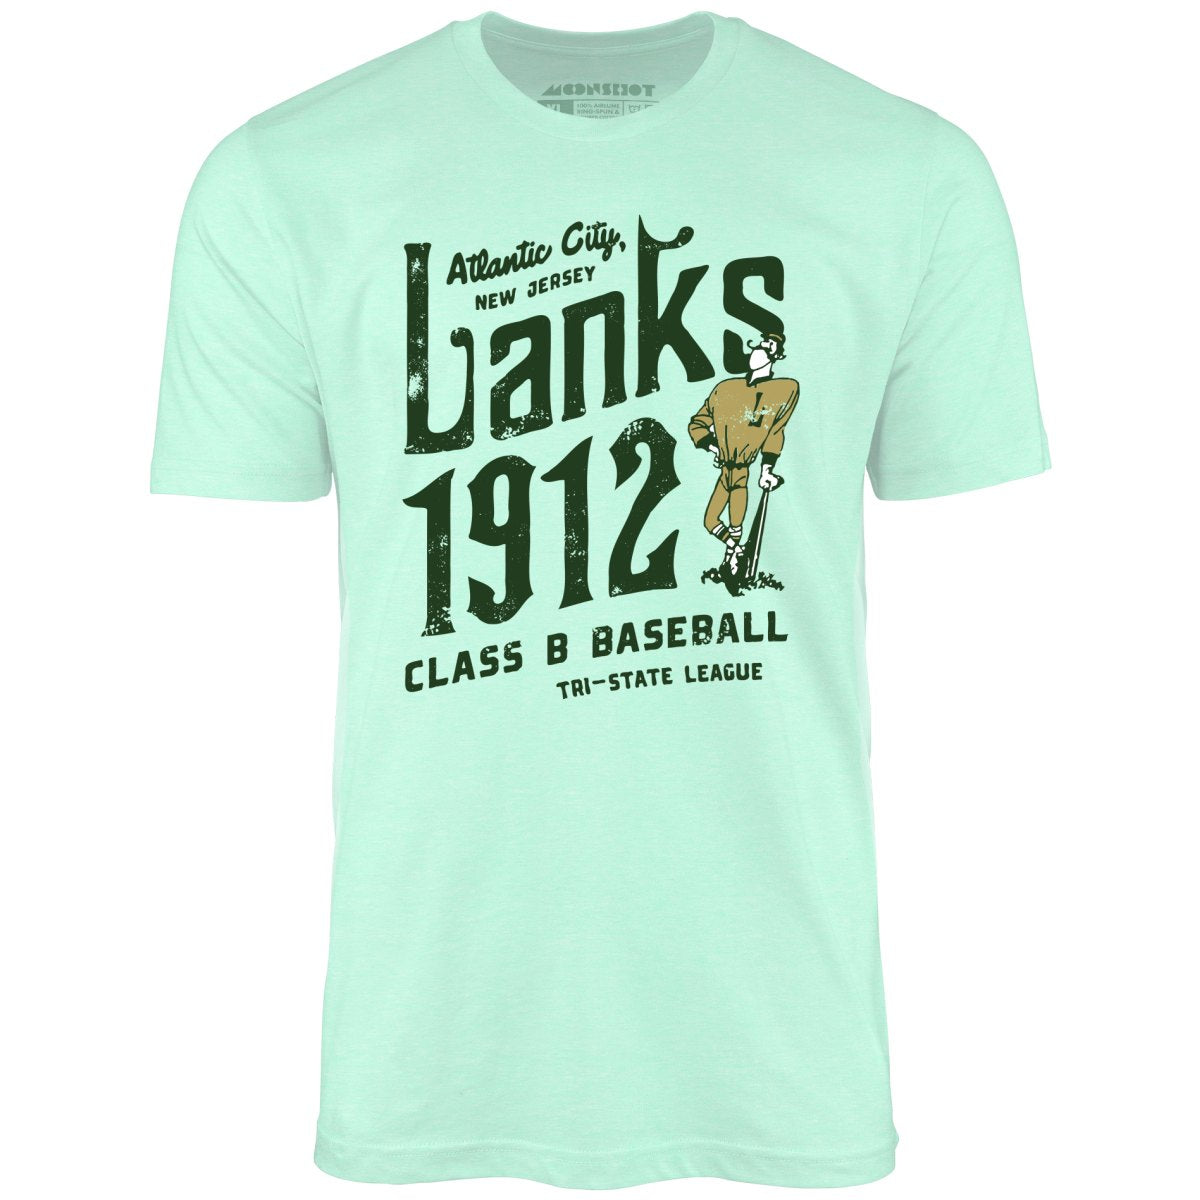 Atlantic City Lanks - New Jersey - Vintage Defunct Baseball Teams - Unisex T-Shirt